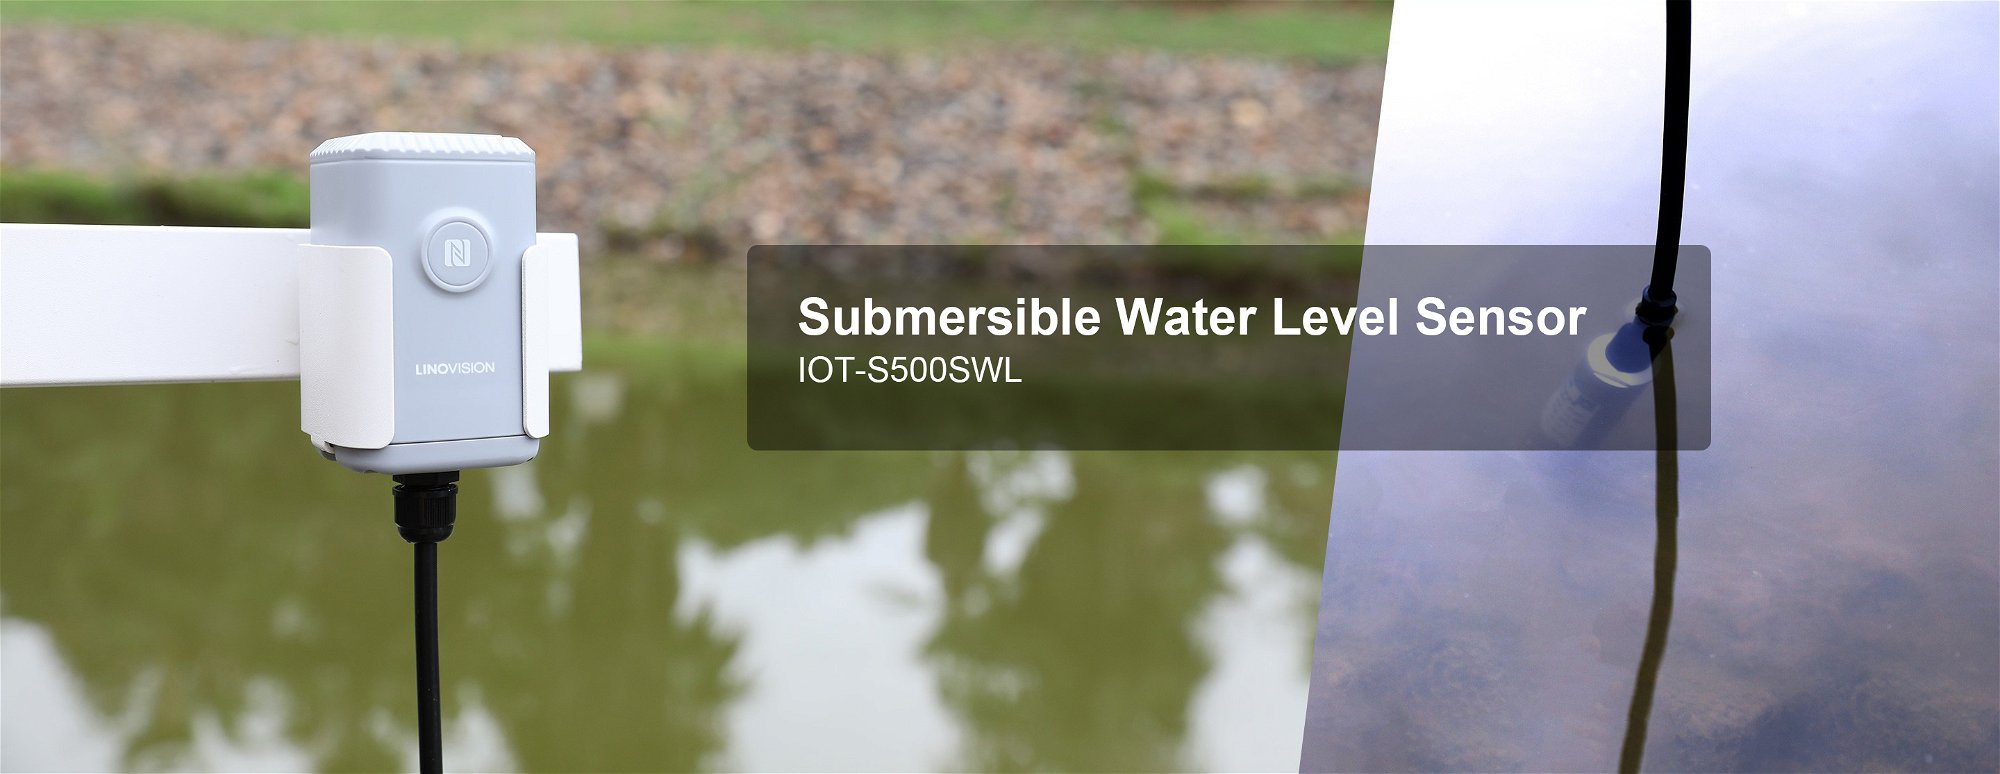 LoRaWAN Wireless Submersible Water Level Sensor with Long Life Battery